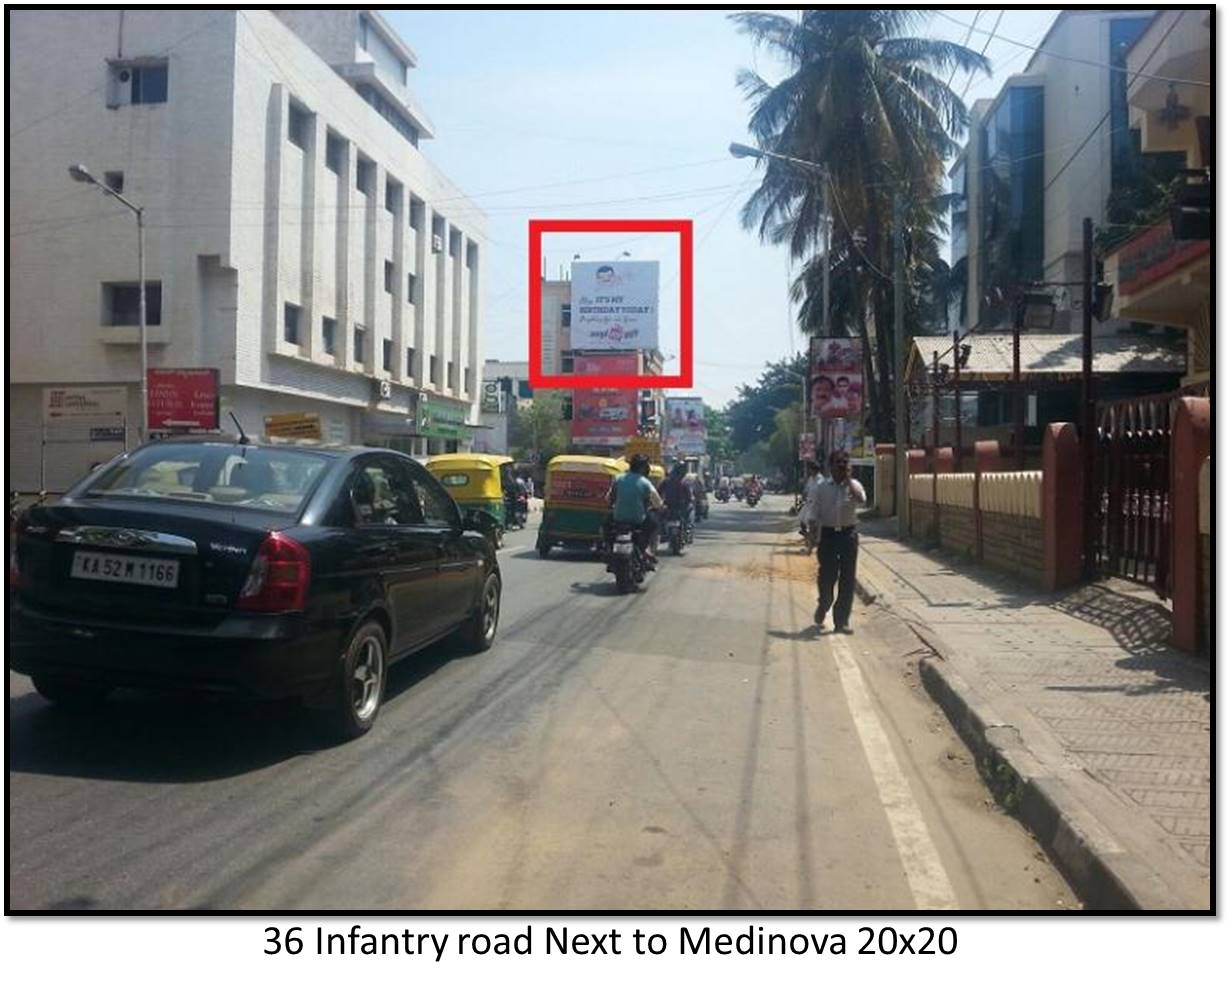 Infantry Road next to Medinova, Bengaluru